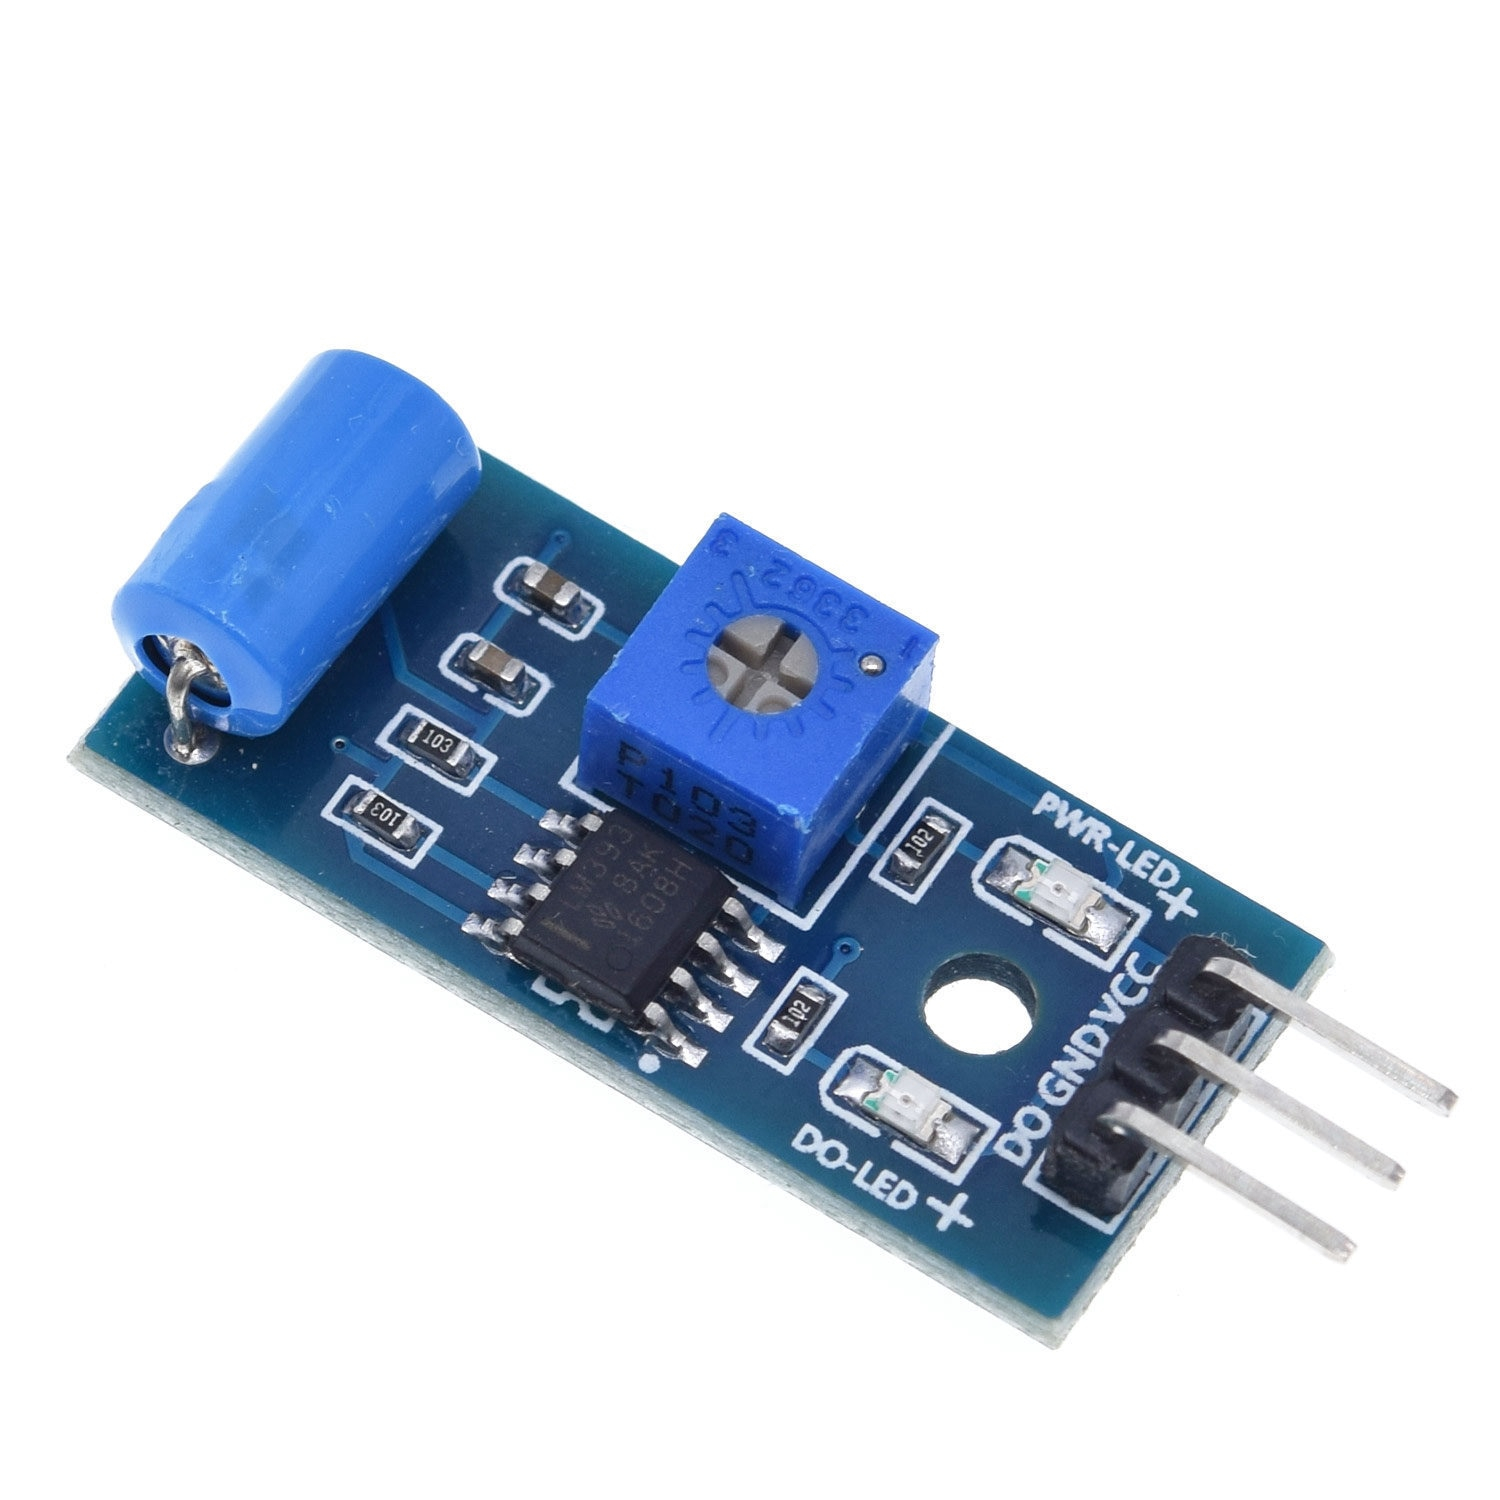 Normally closed type vibration sensor module Alarm sensor module Vibration switch SW-420 for arduino